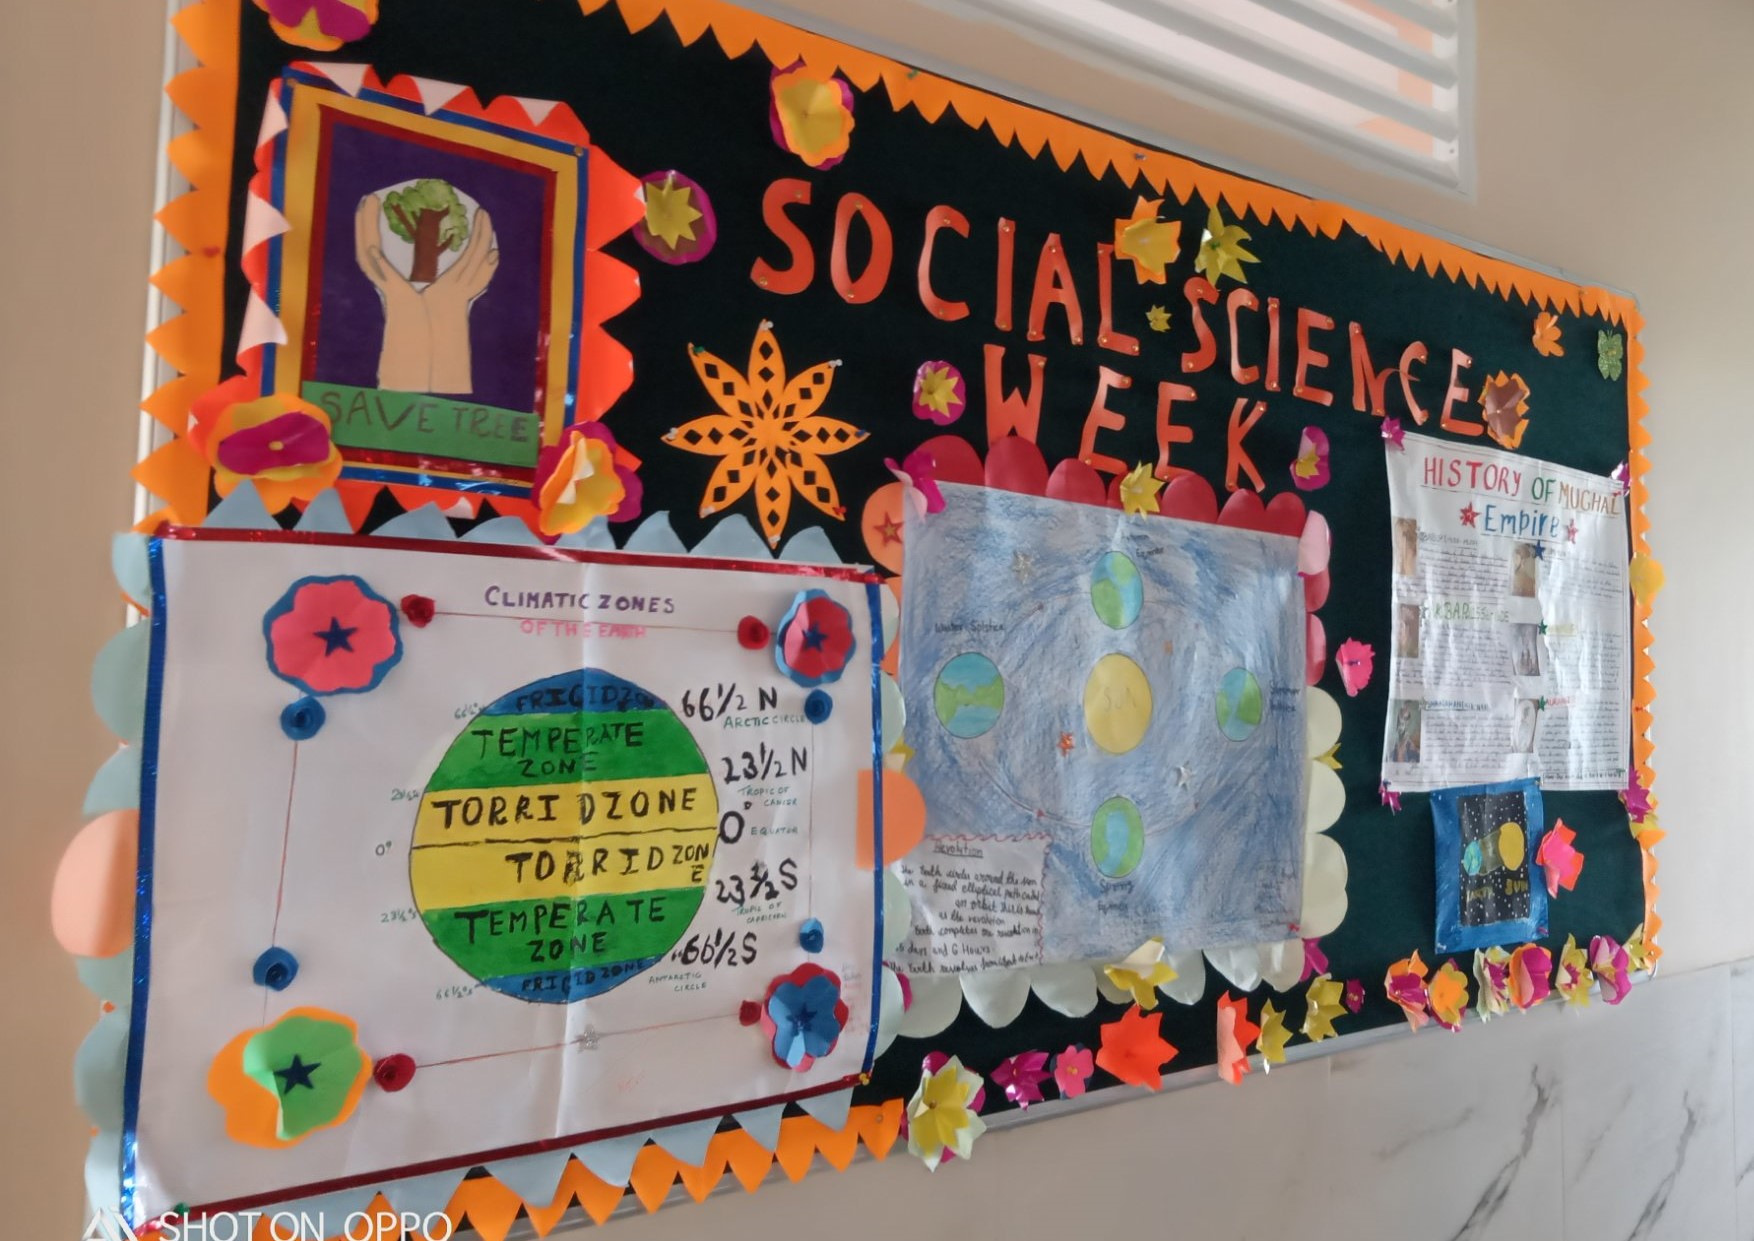 Social Science Week Celebration